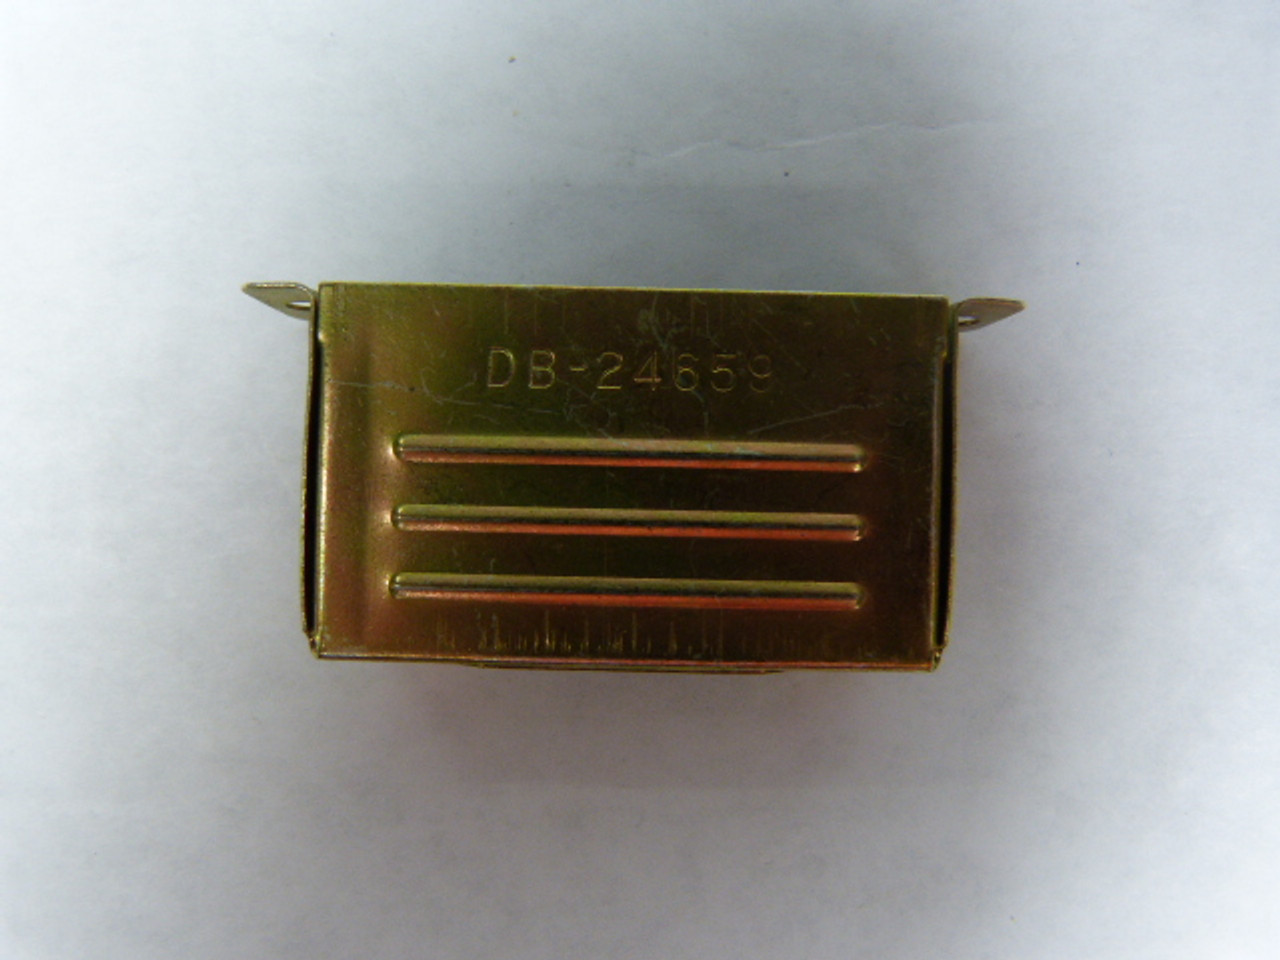 TRW Cinch DB-24659 Connector 25 Pin USED